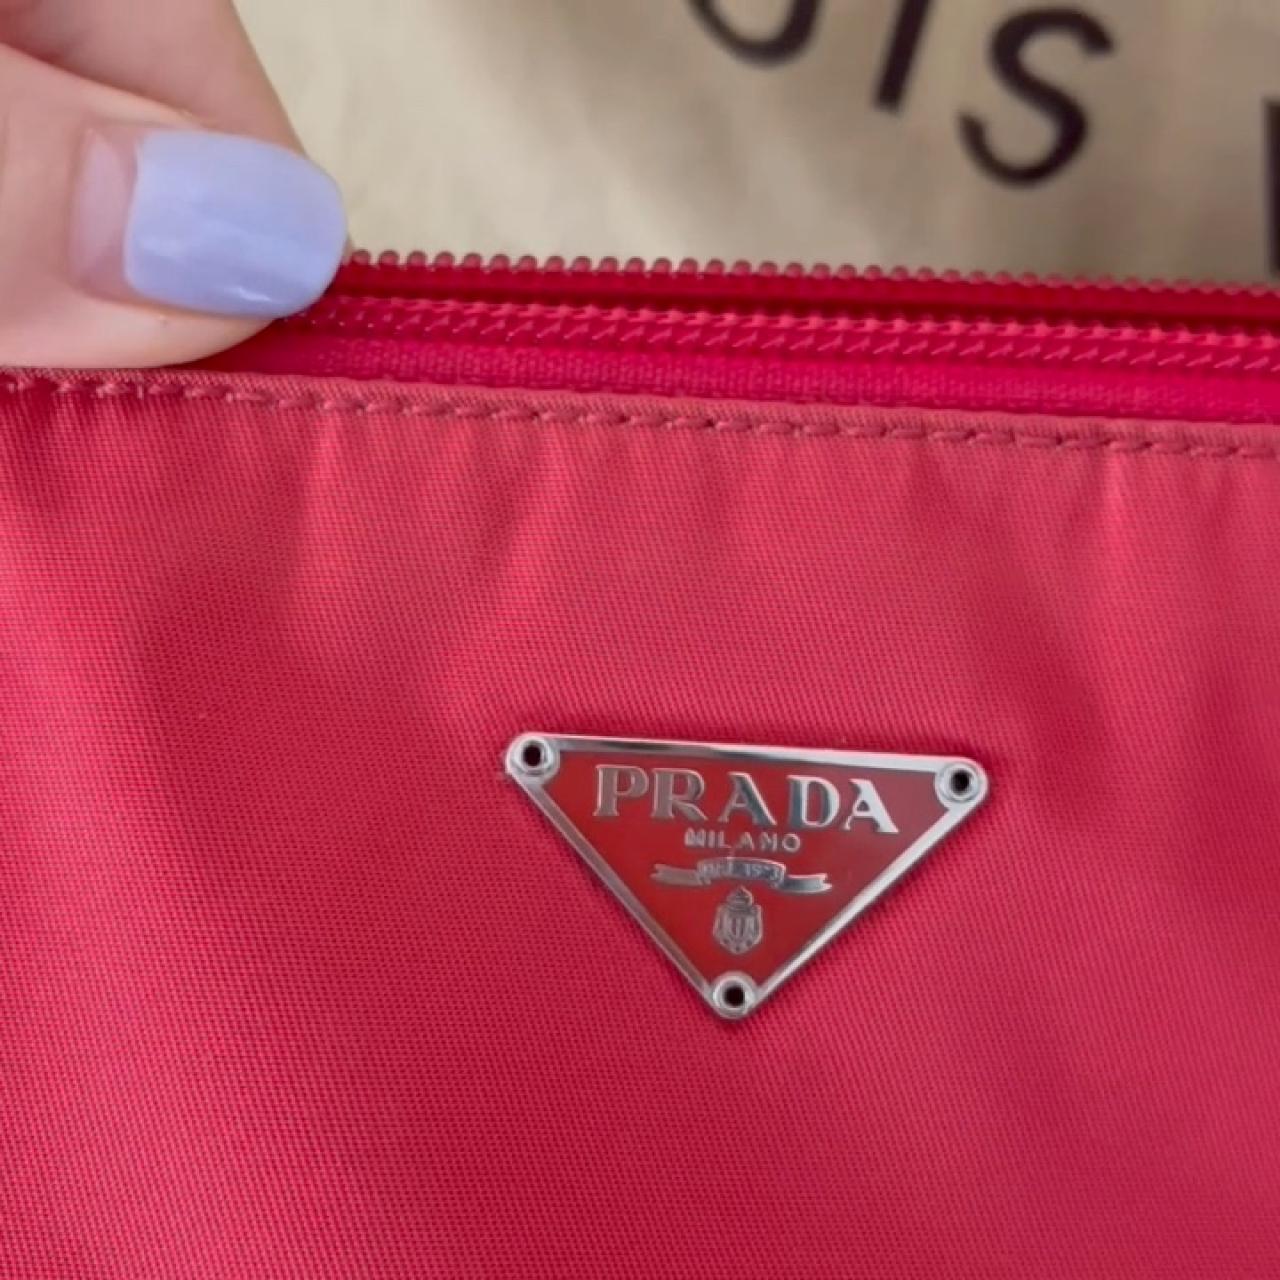 Prada Women's Red Bag | Depop